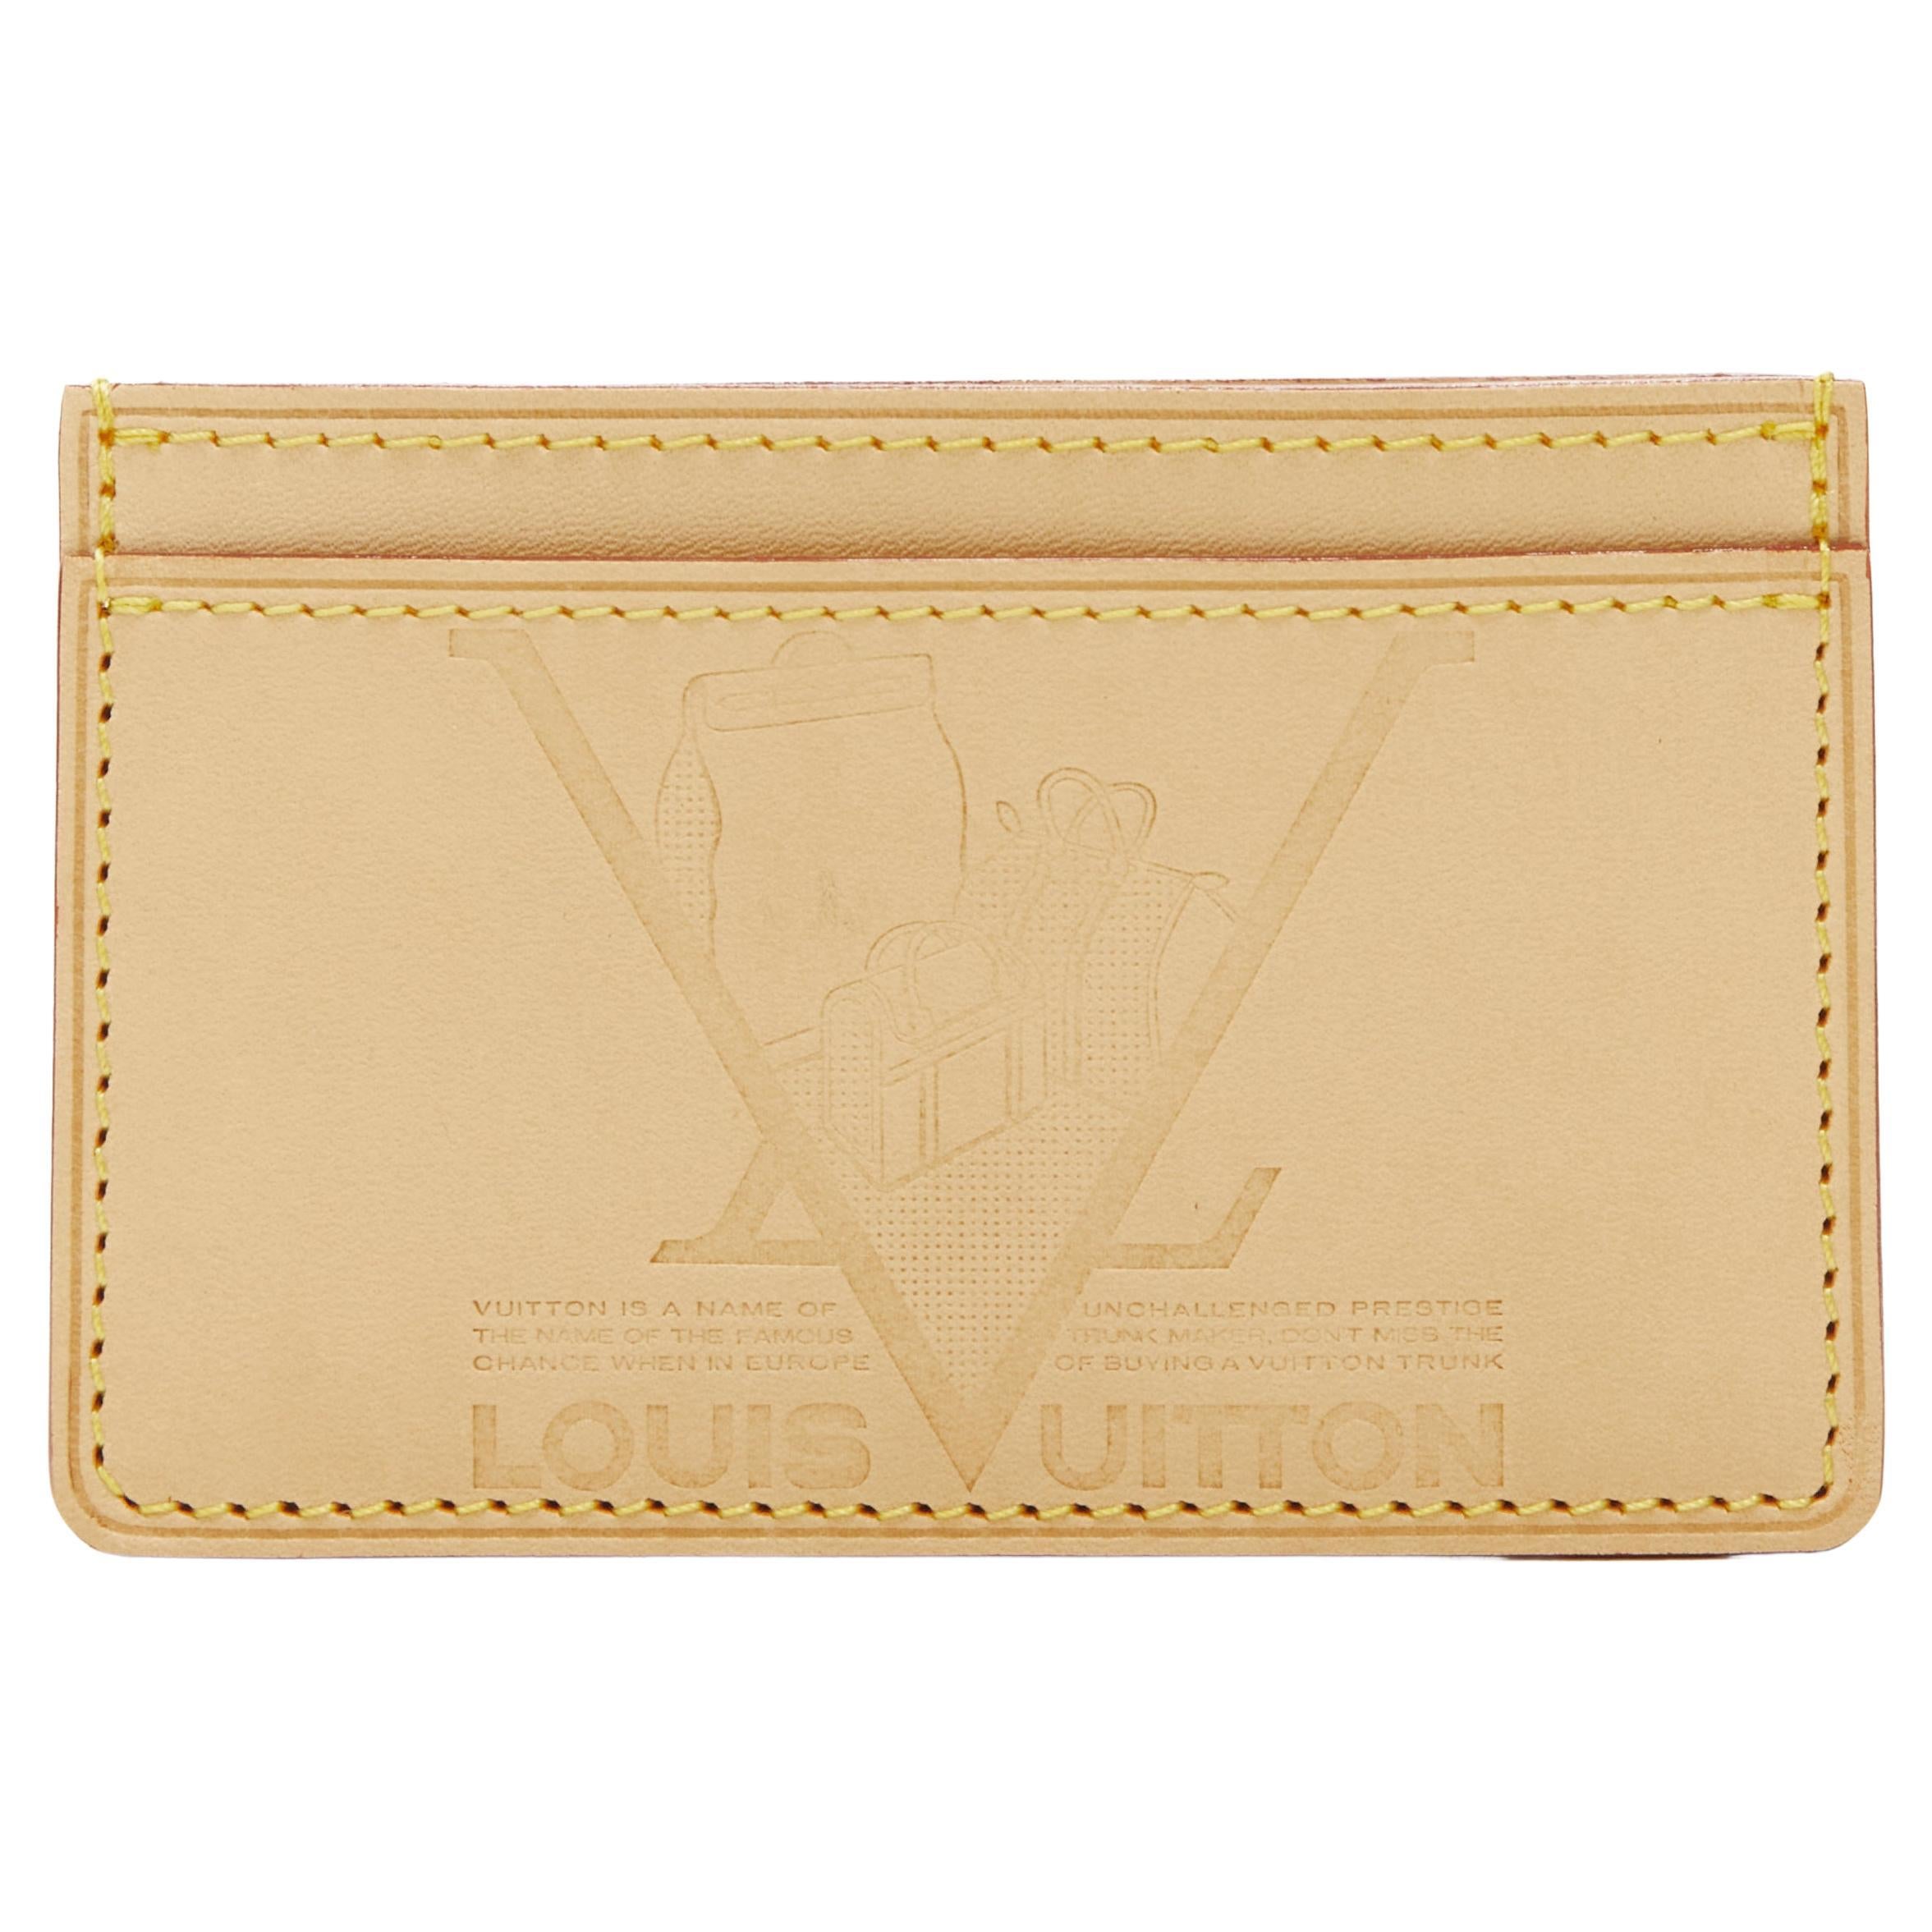 LOUIS VUITTON LV logo trunk embossed tan Vachetta leather cardholder wallet